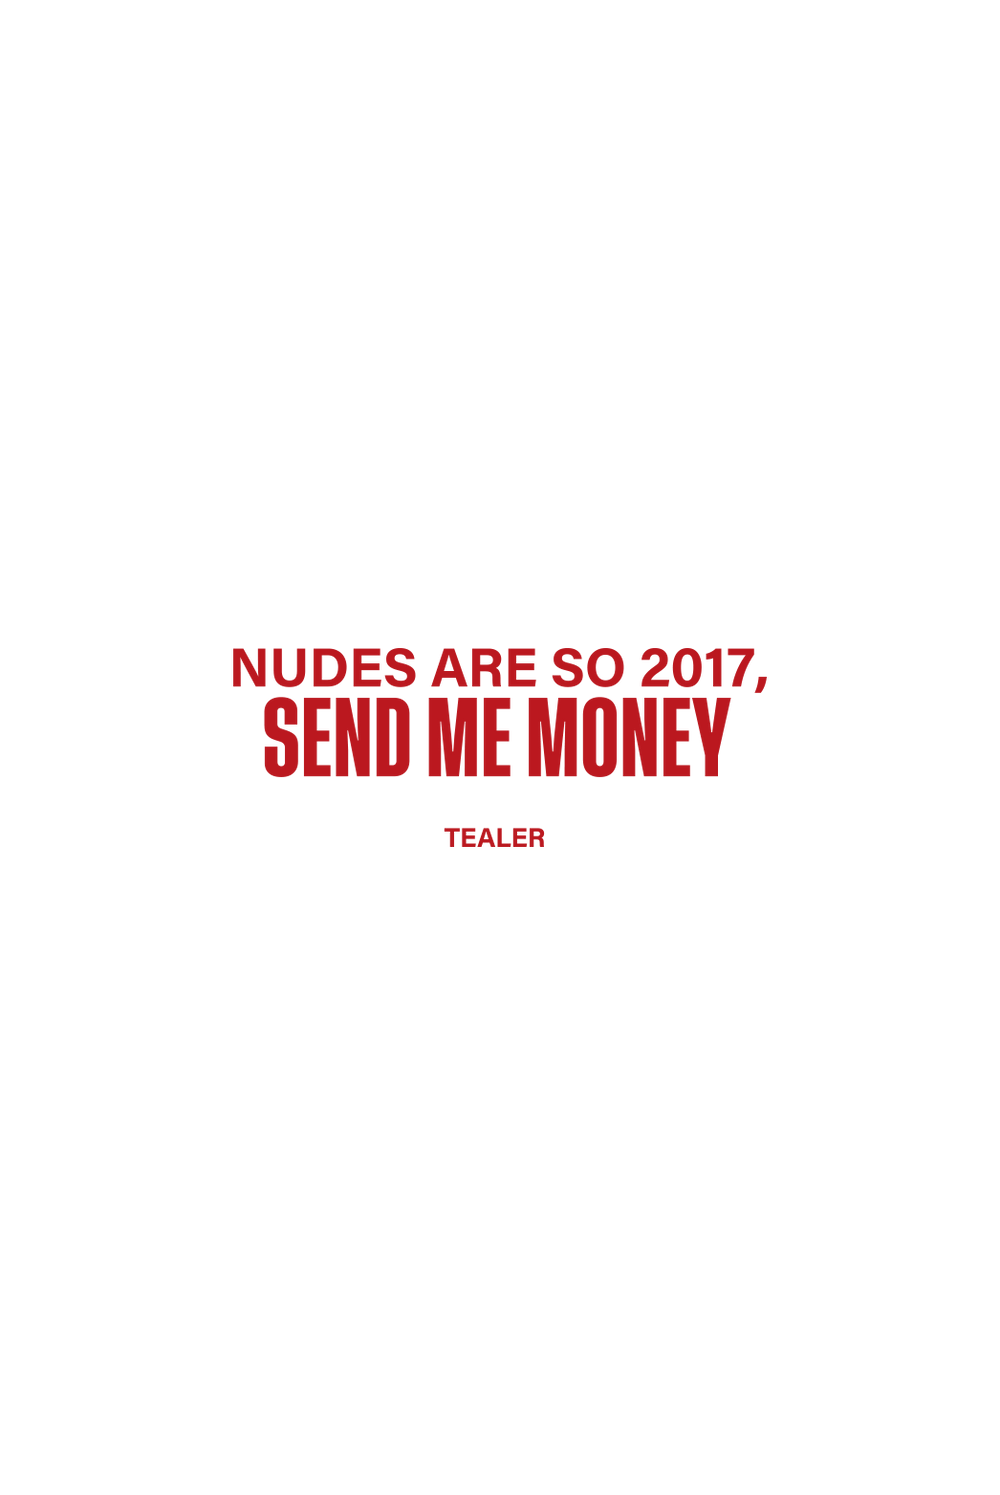 Tealer nudes are so 2017 send me money, Tee White